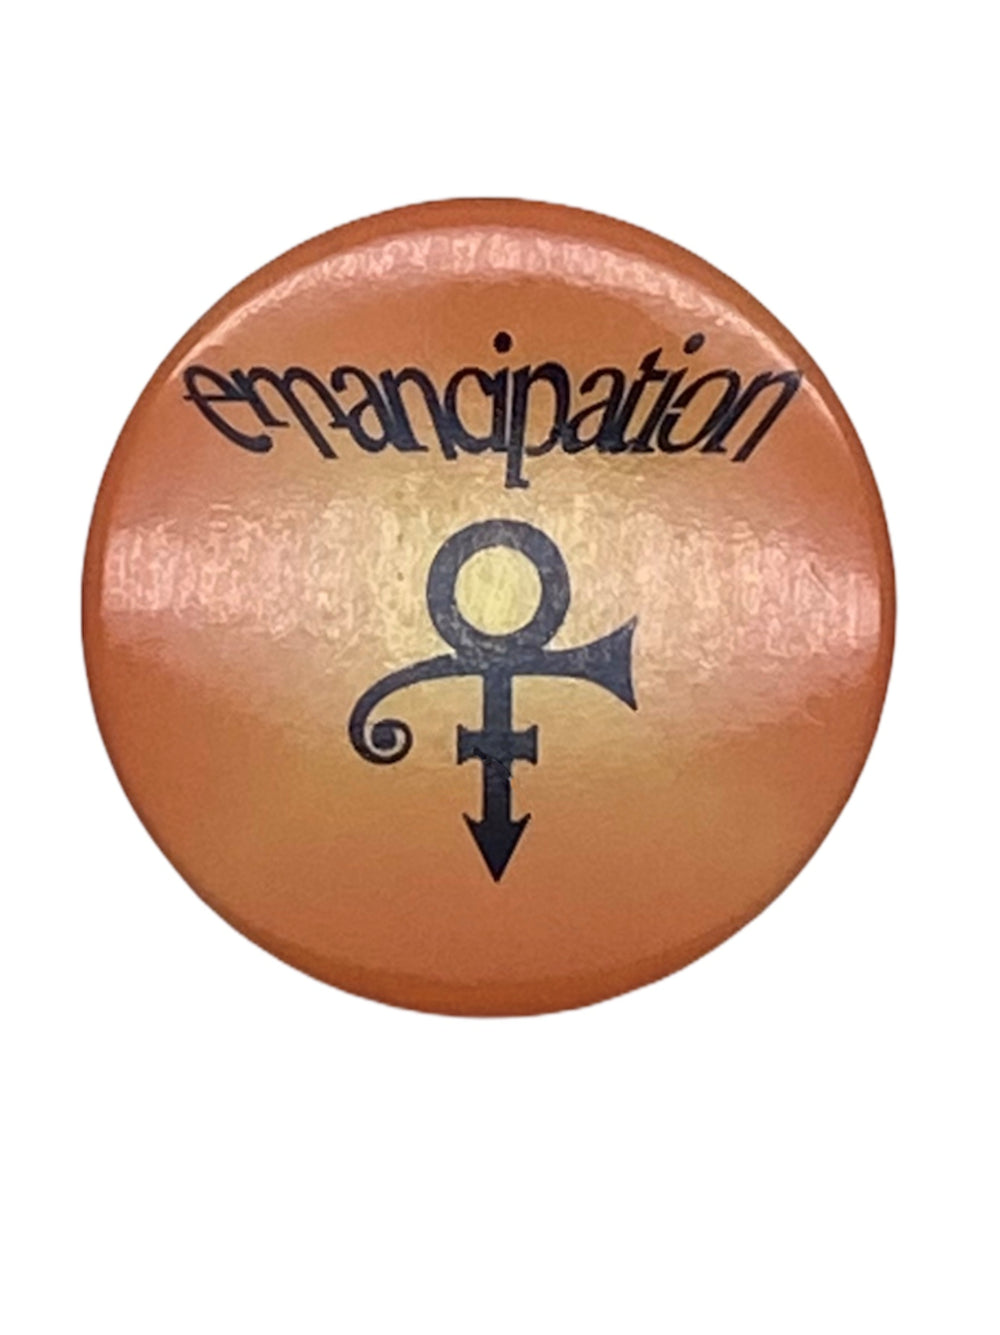 NPG Store Official Merchandise Large Badge Emancipation Prince